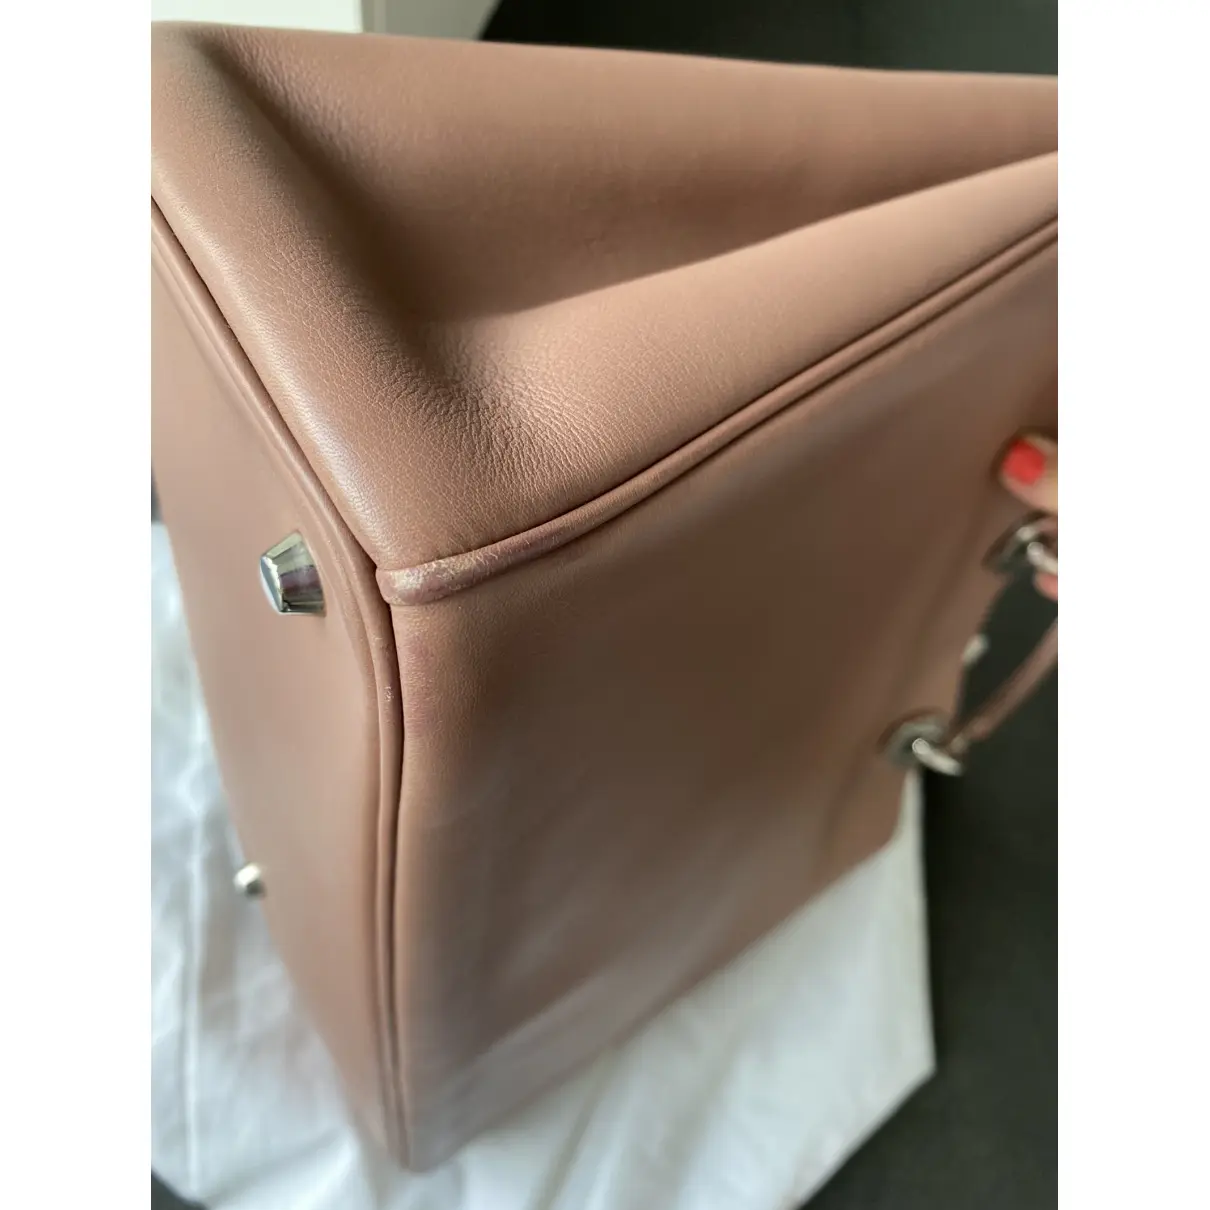 Diorissimo leather handbag Dior